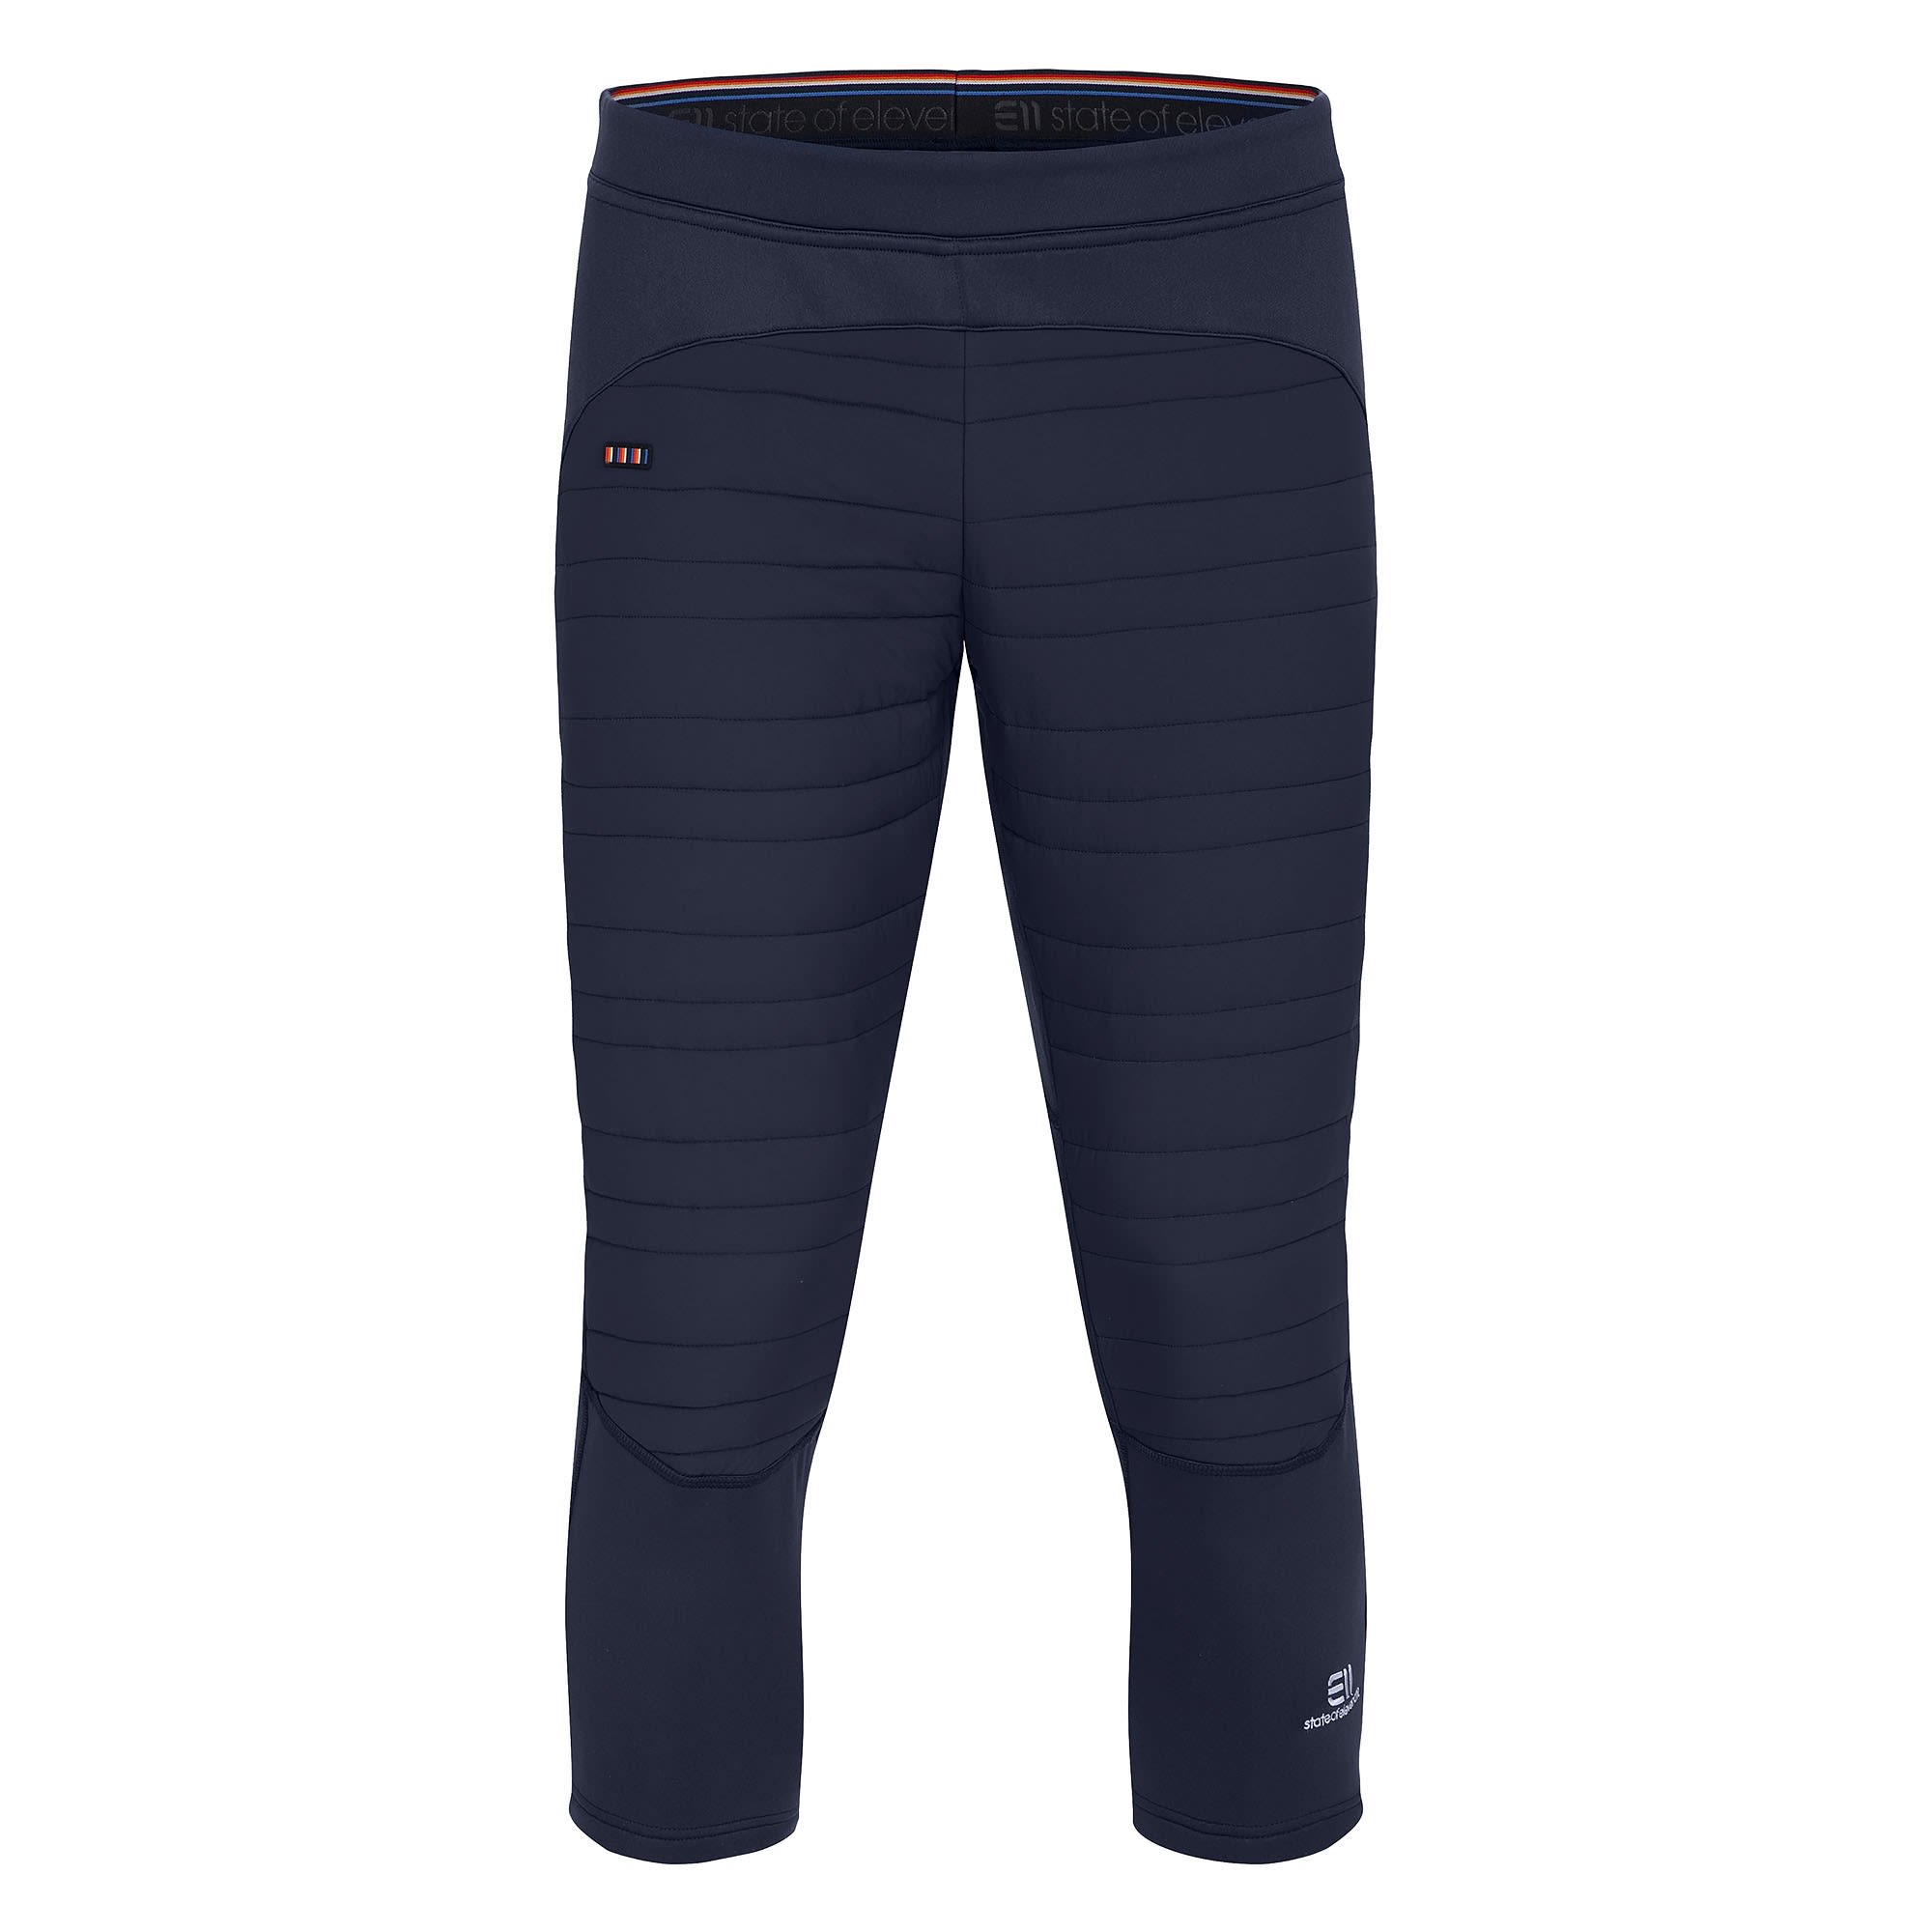 Elevenate Fusion Stretch Pants Blau- Male Hosen- Grsse XL - Farbe Dark Navy